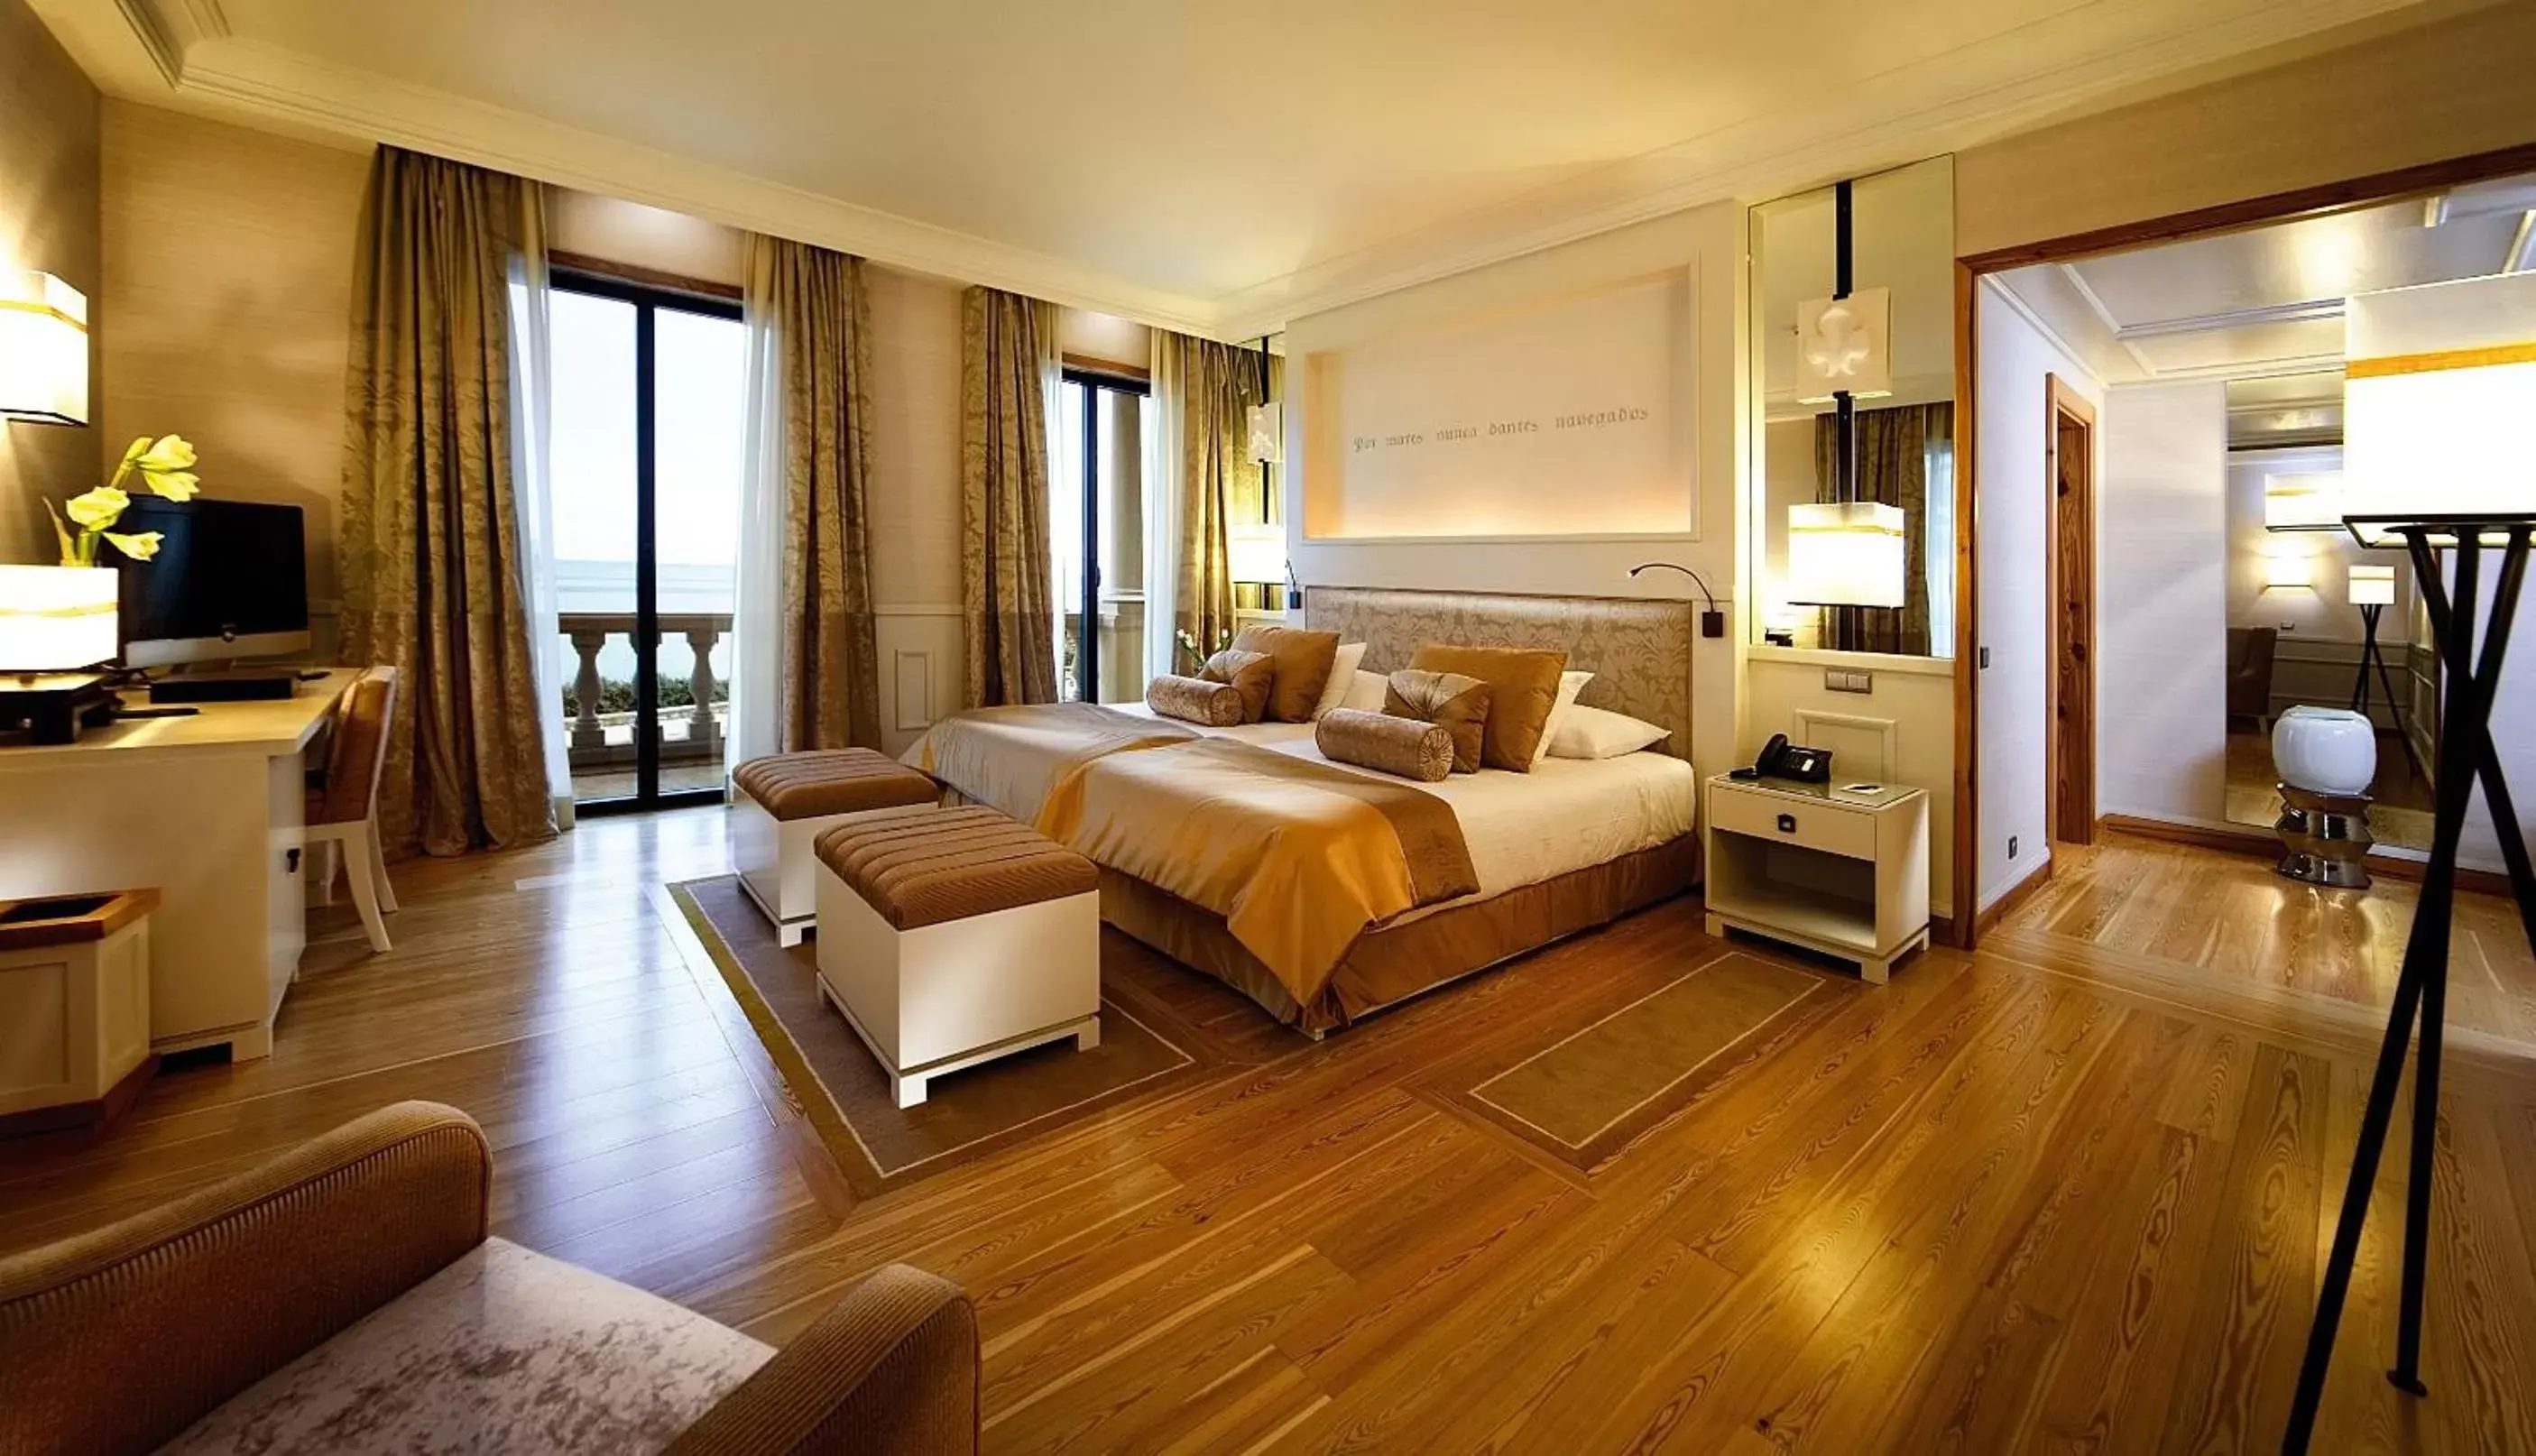 Photo of the whole room in Grande Real Villa Itália Hotel & Spa